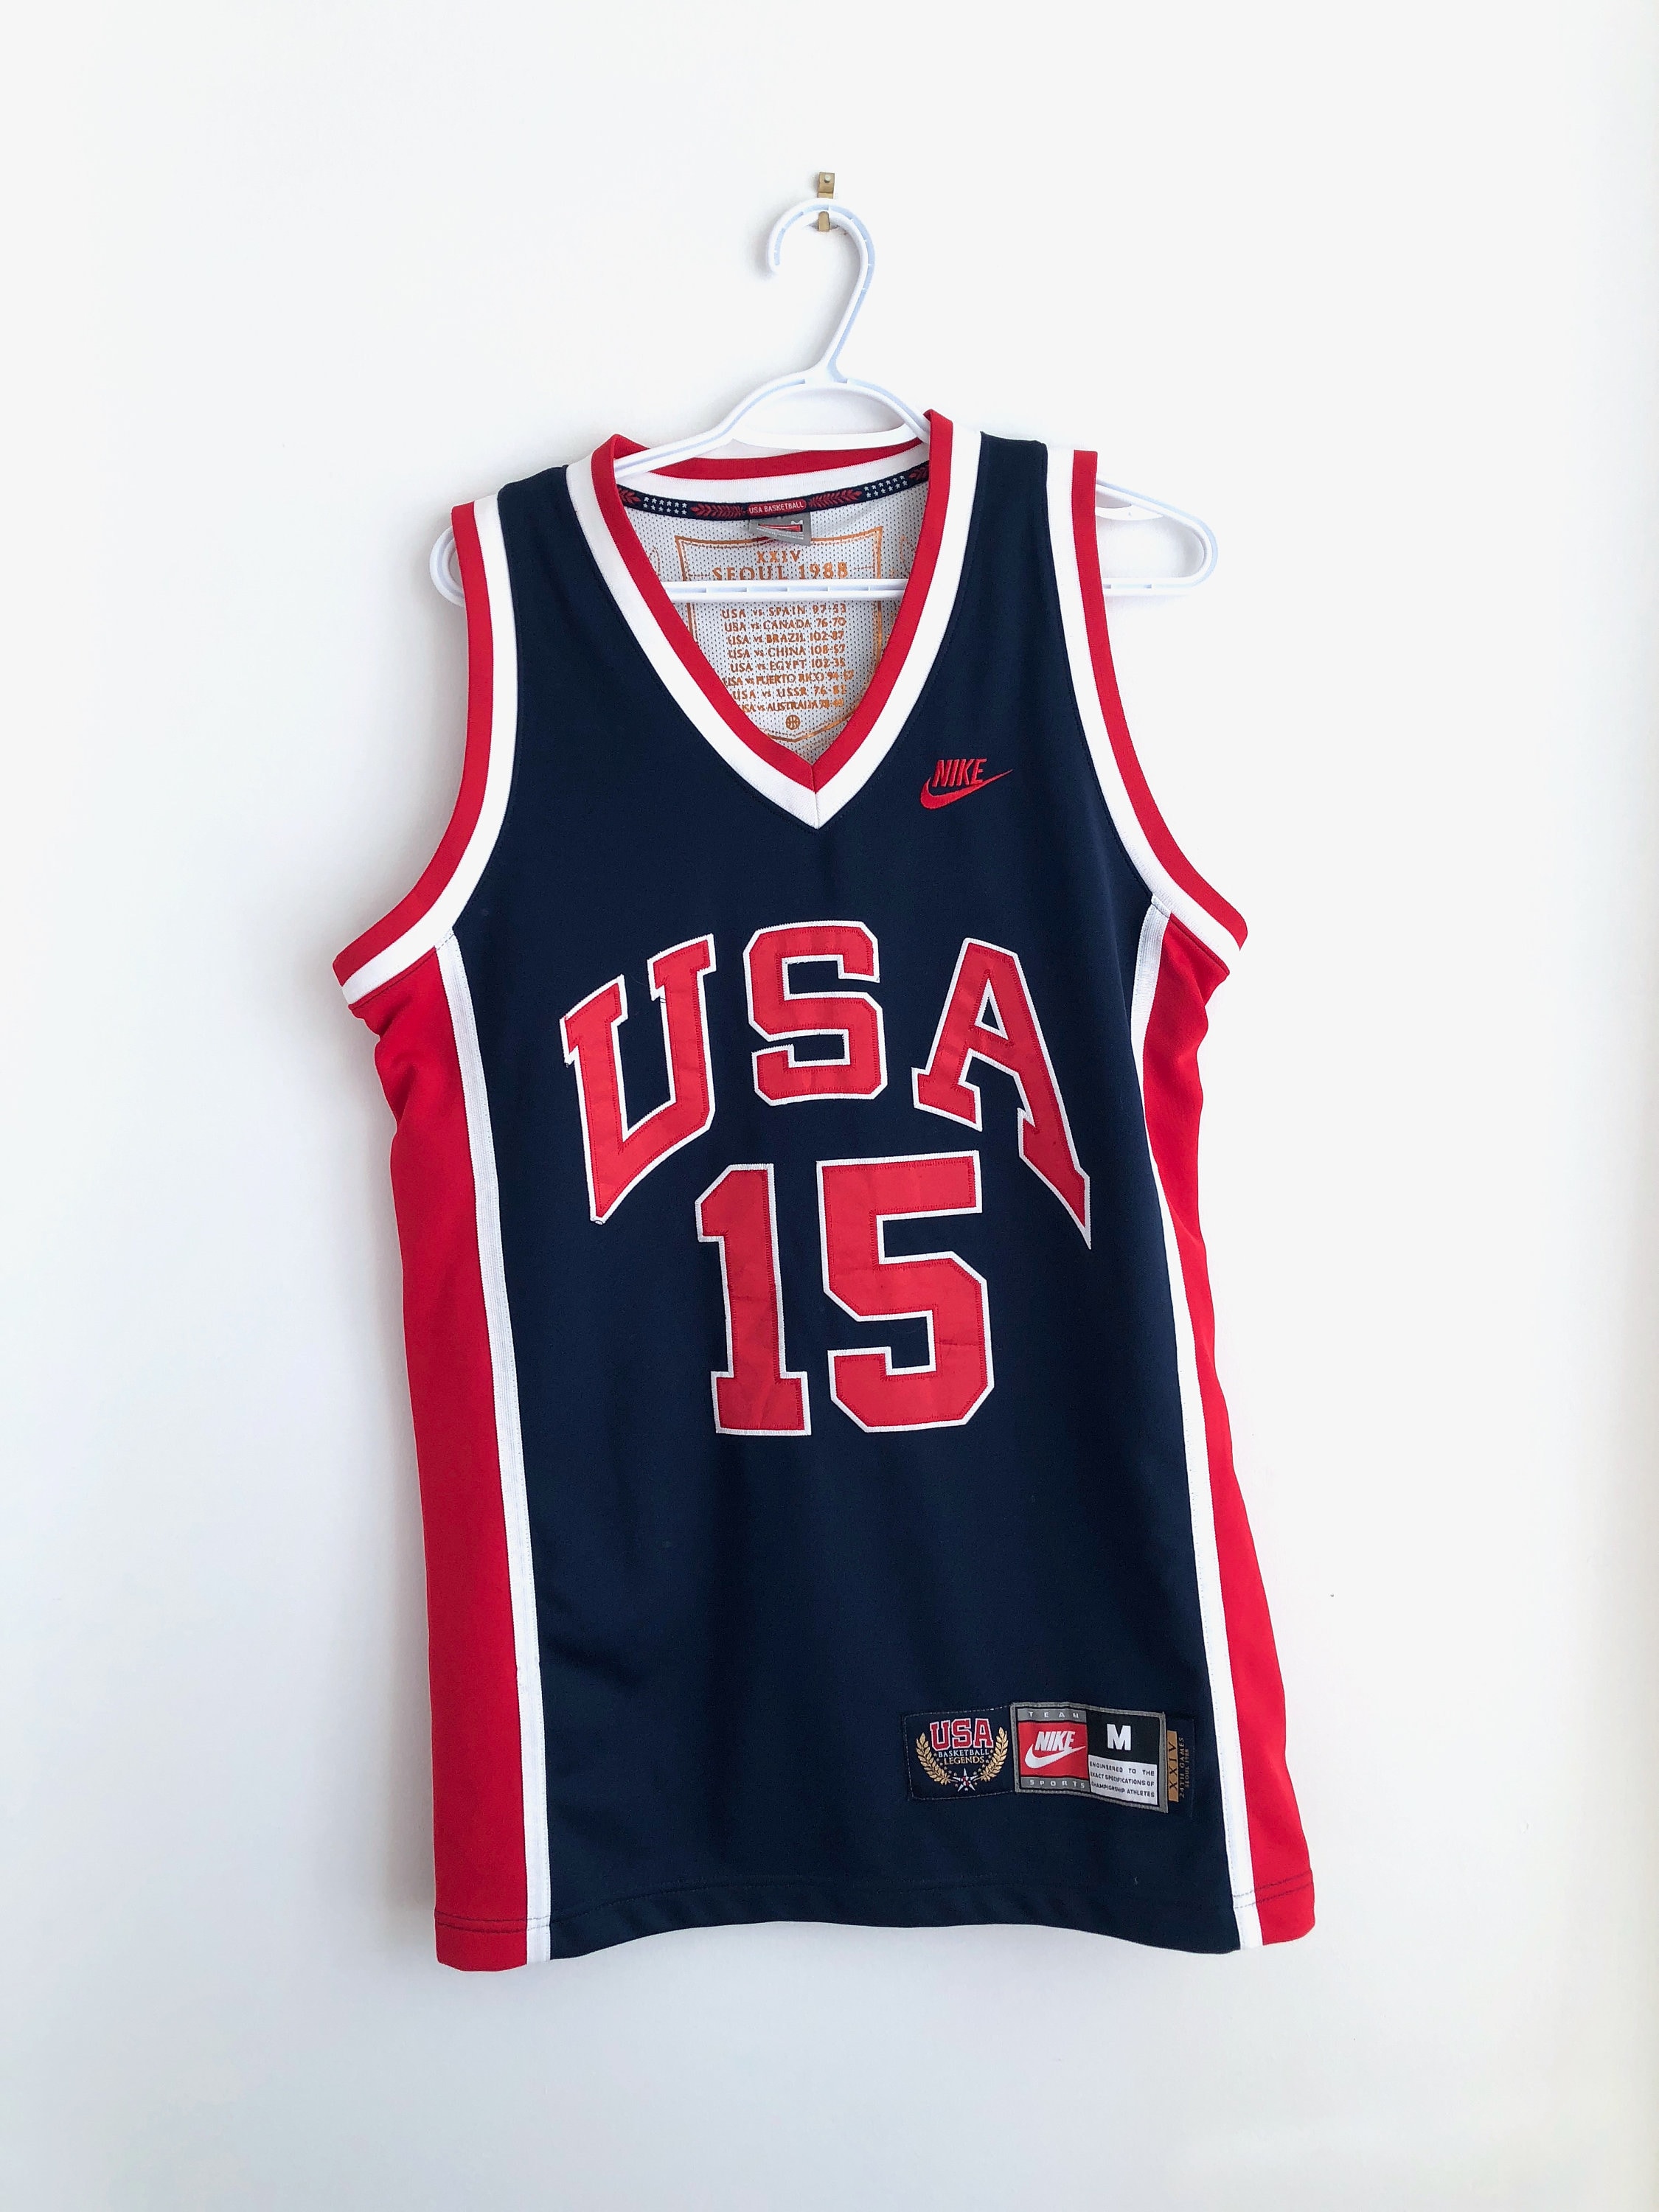 Rare NIKE Larry Bird USA Basketball Olympic Dream Team Jersey Shirt XXL